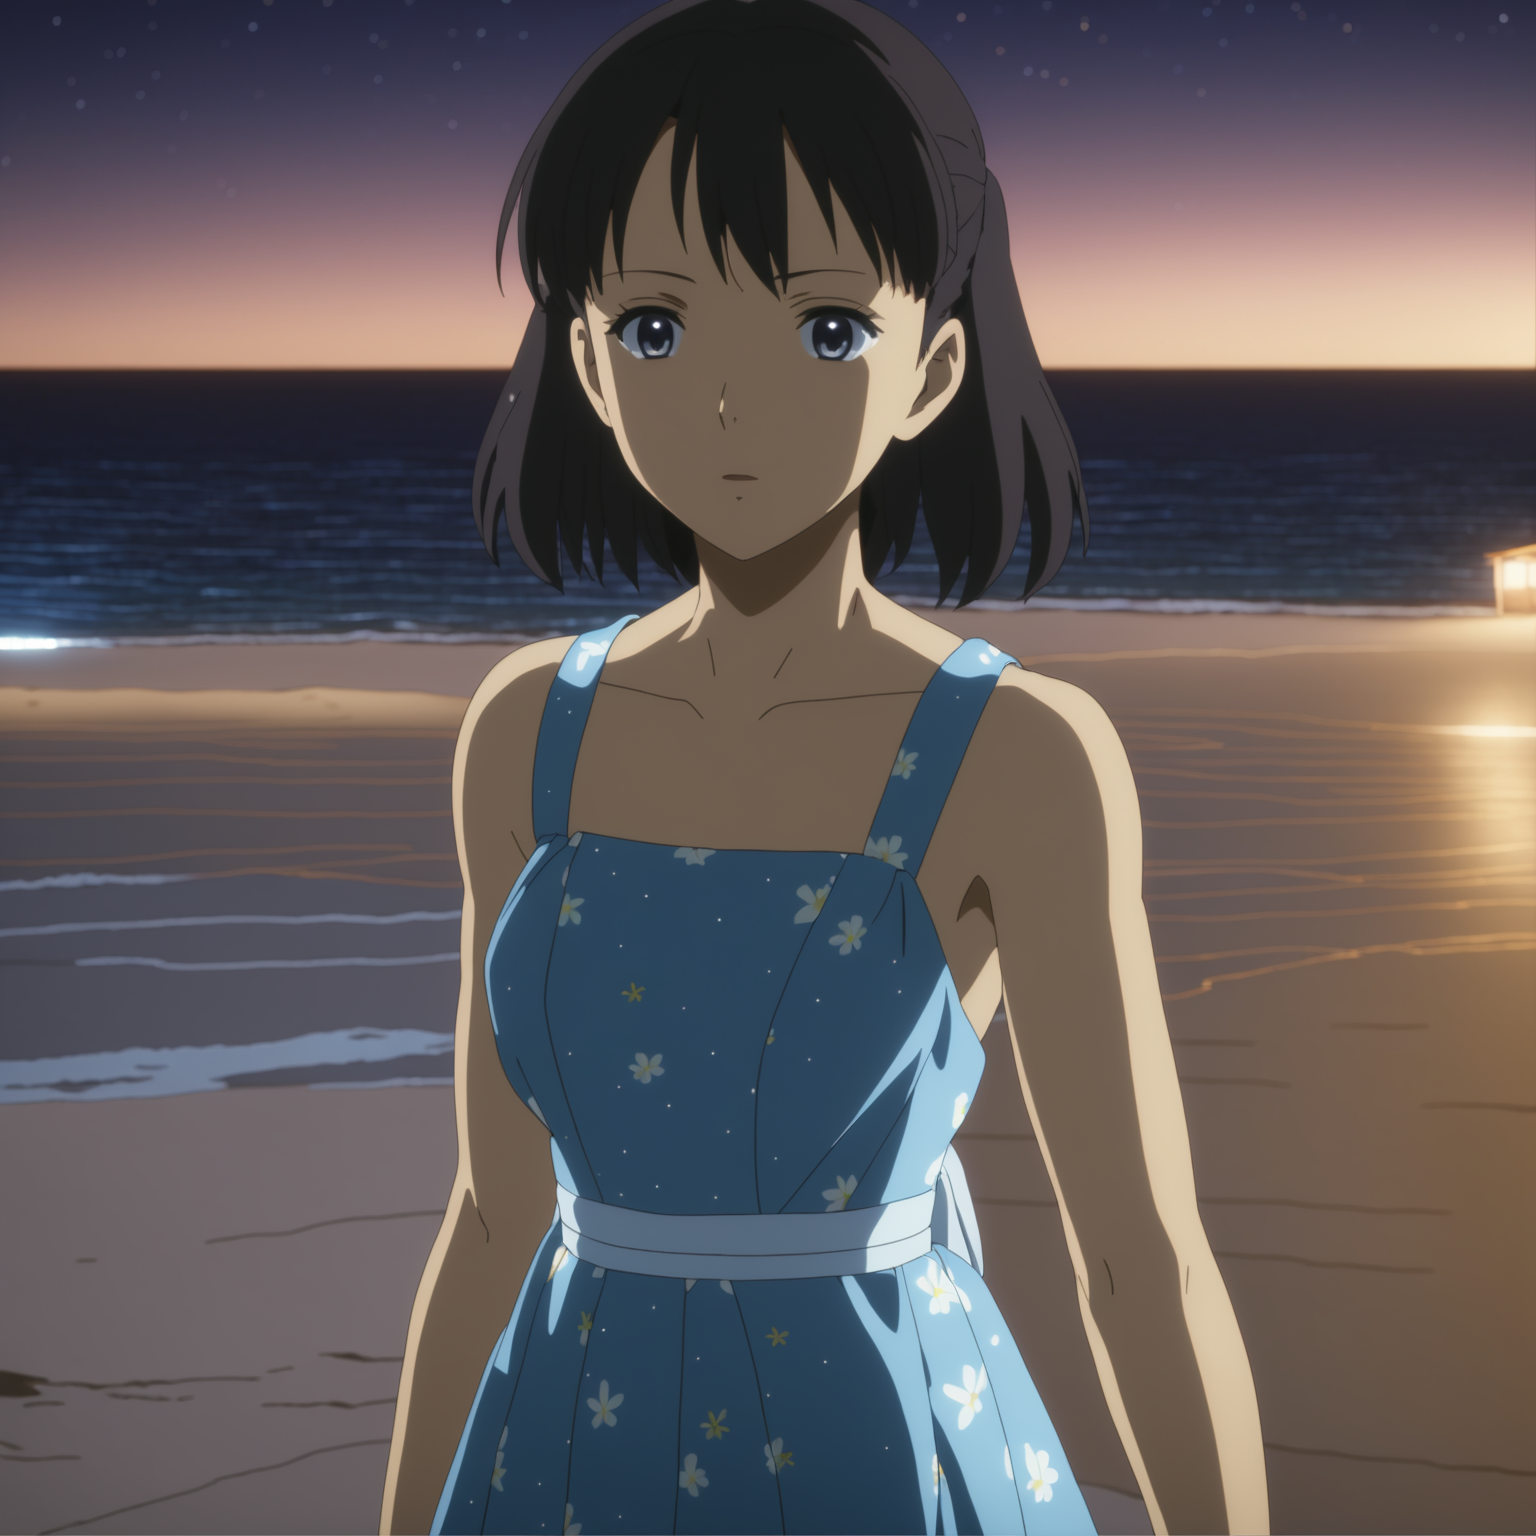 A anime screenshot of a girl wearing sundress on a beach at night.